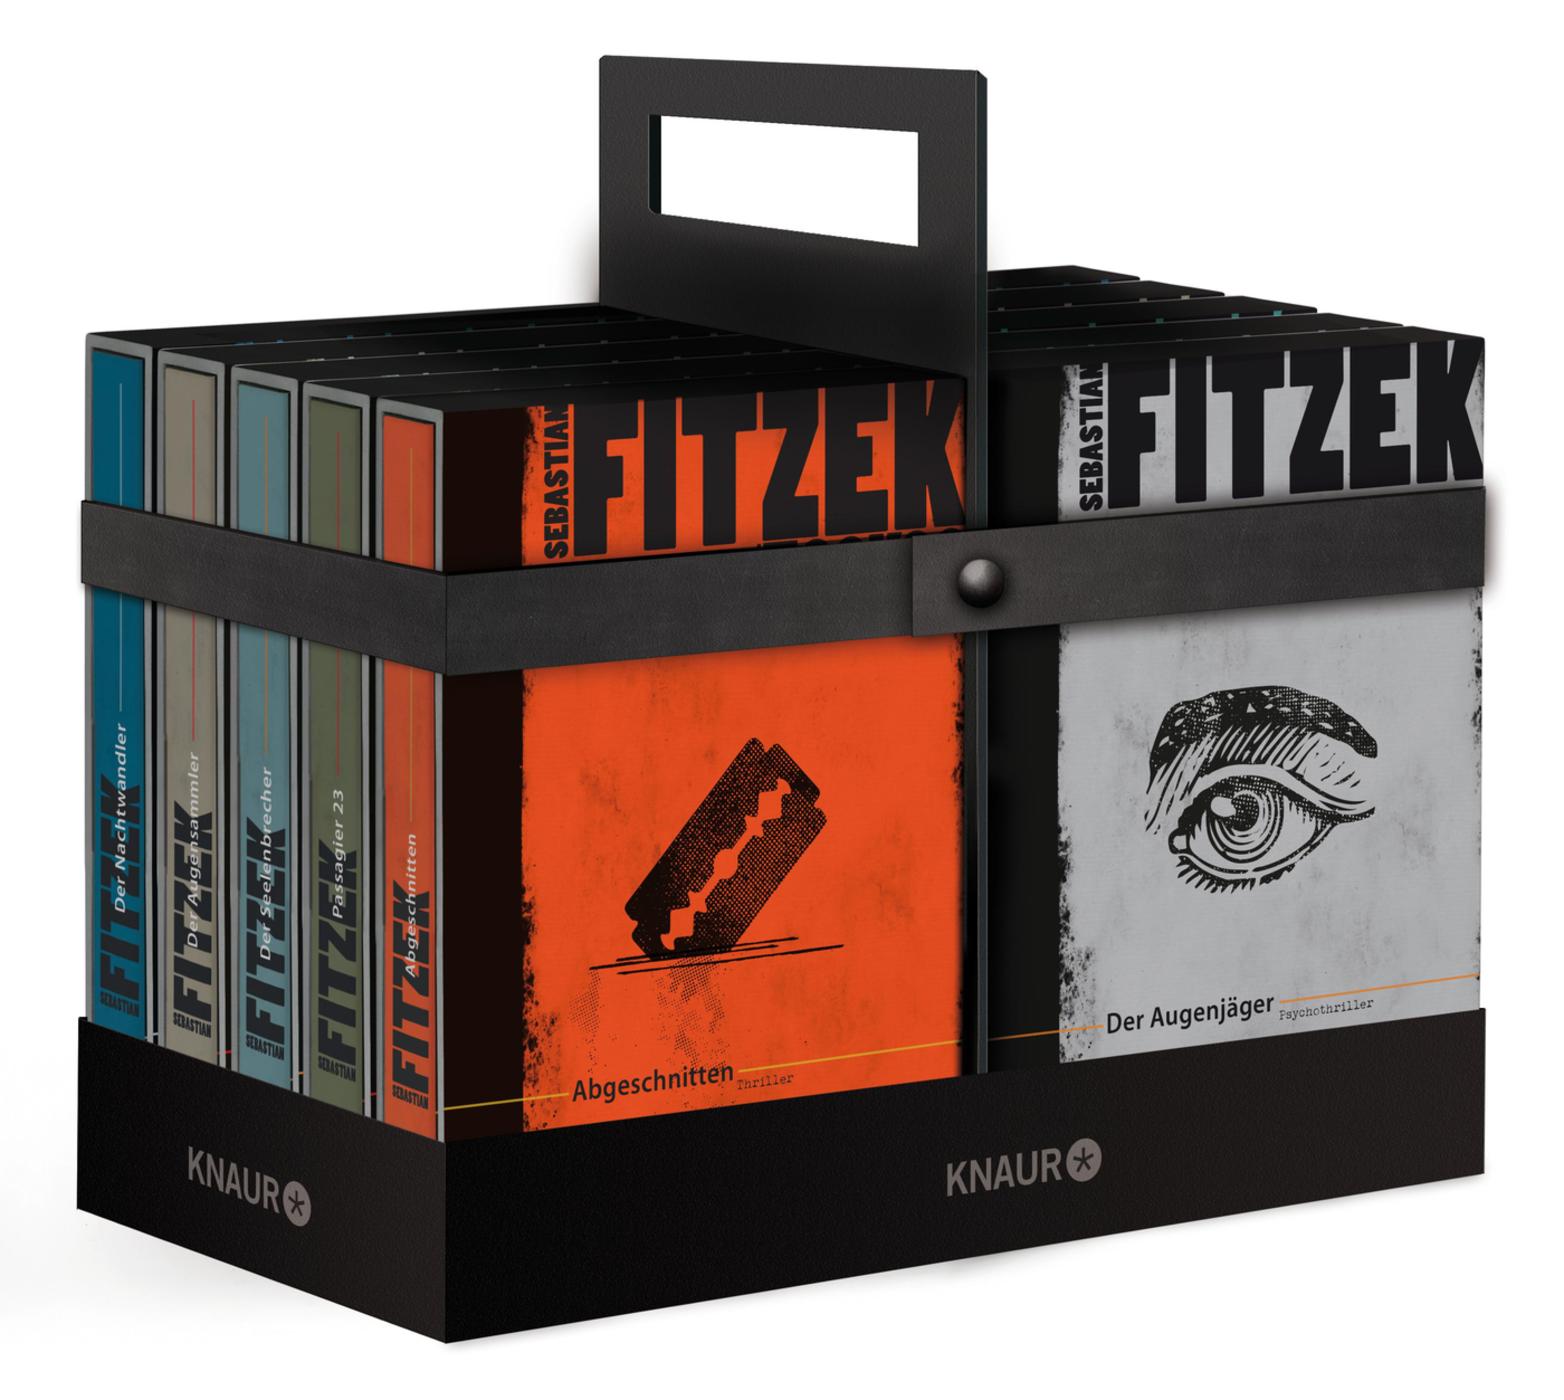 Fitzek-Box, 10 Bände | Sebastian Fitzek |  9783426519301 - Picture 1 of 1